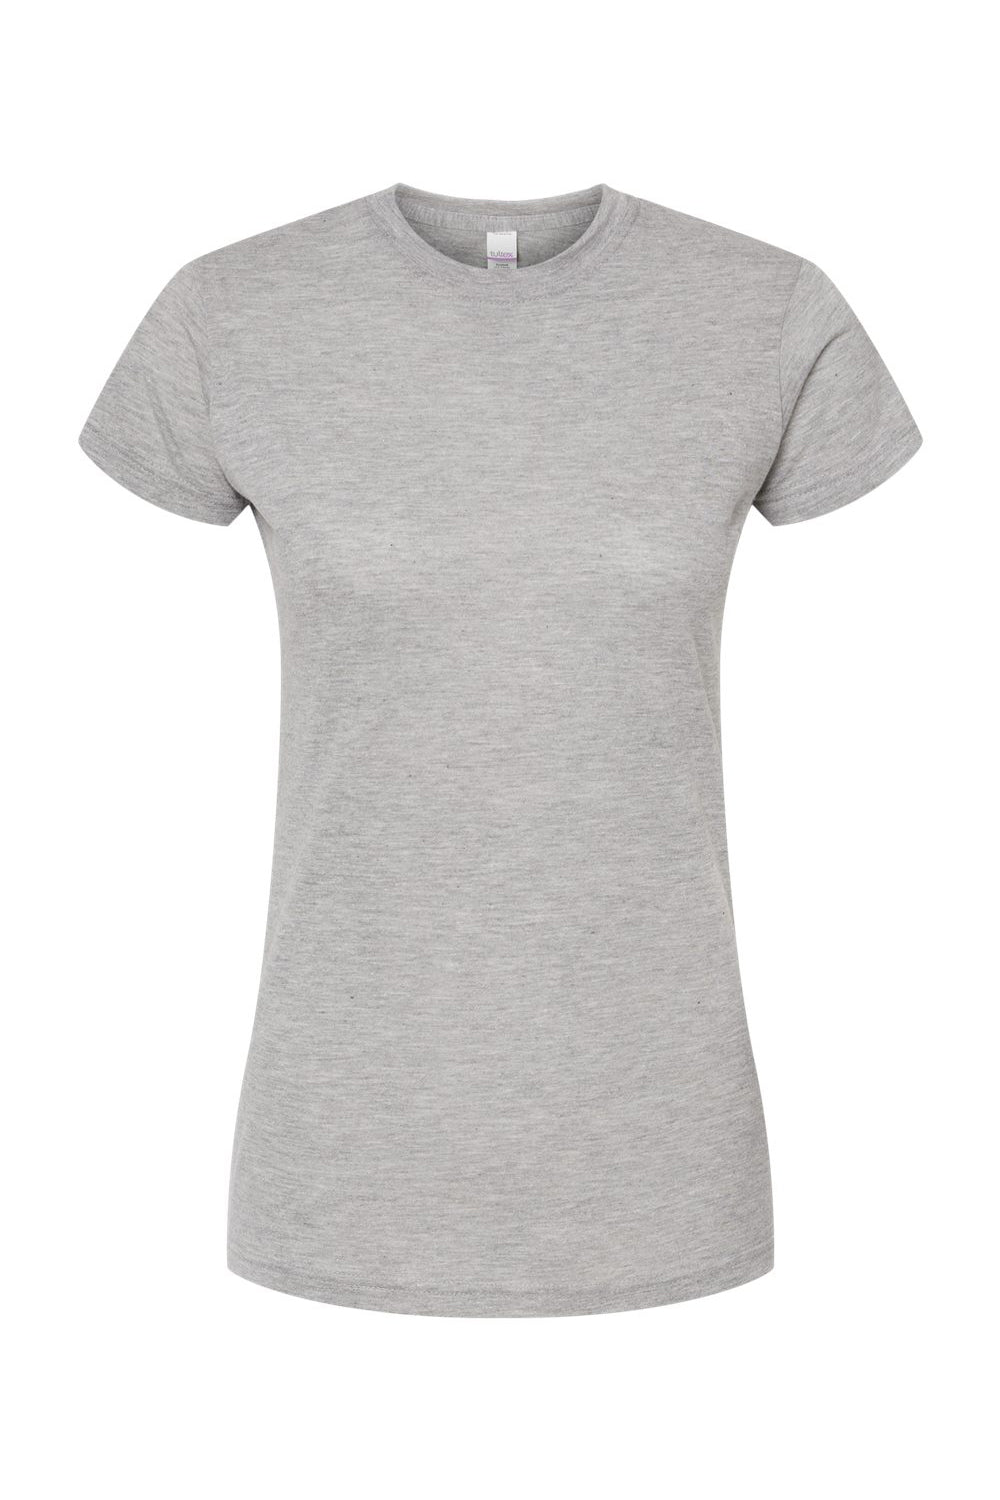 Tultex 240 Womens Poly-Rich Short Sleeve Crewneck T-Shirt Heather Grey Flat Front